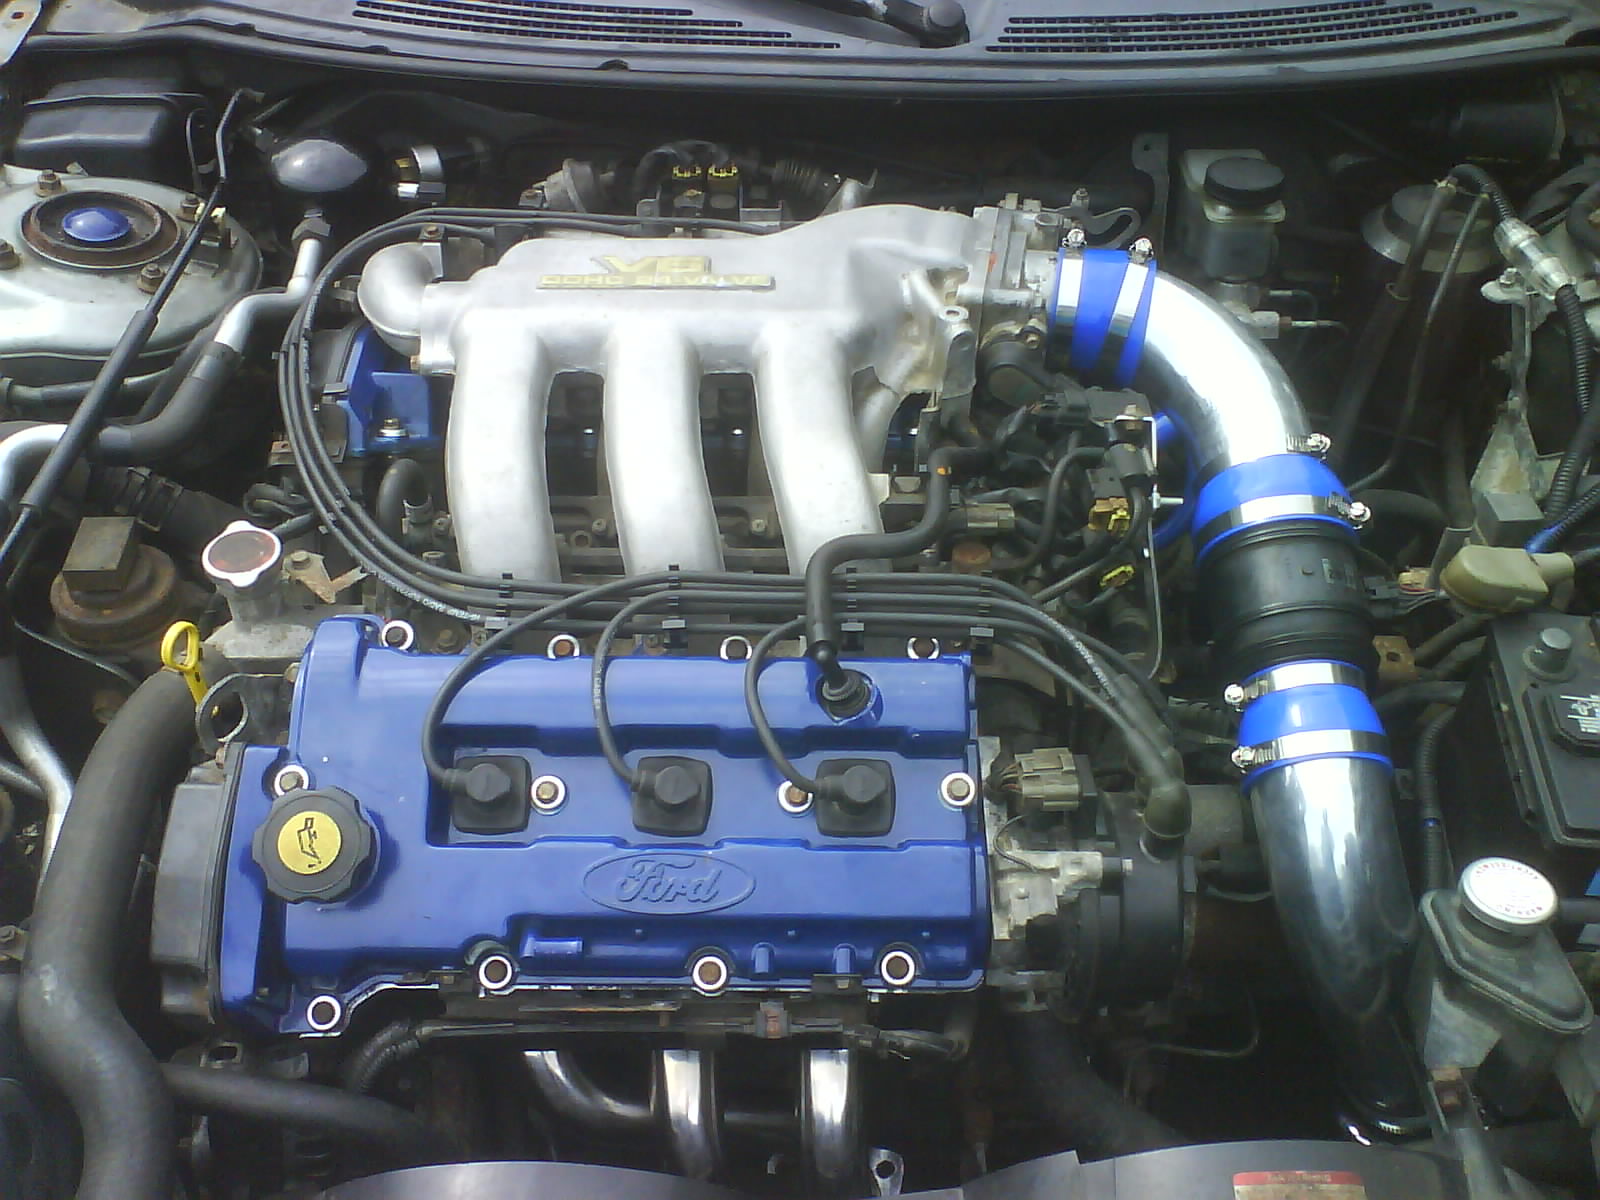 1997 Ford probe engine specs #7